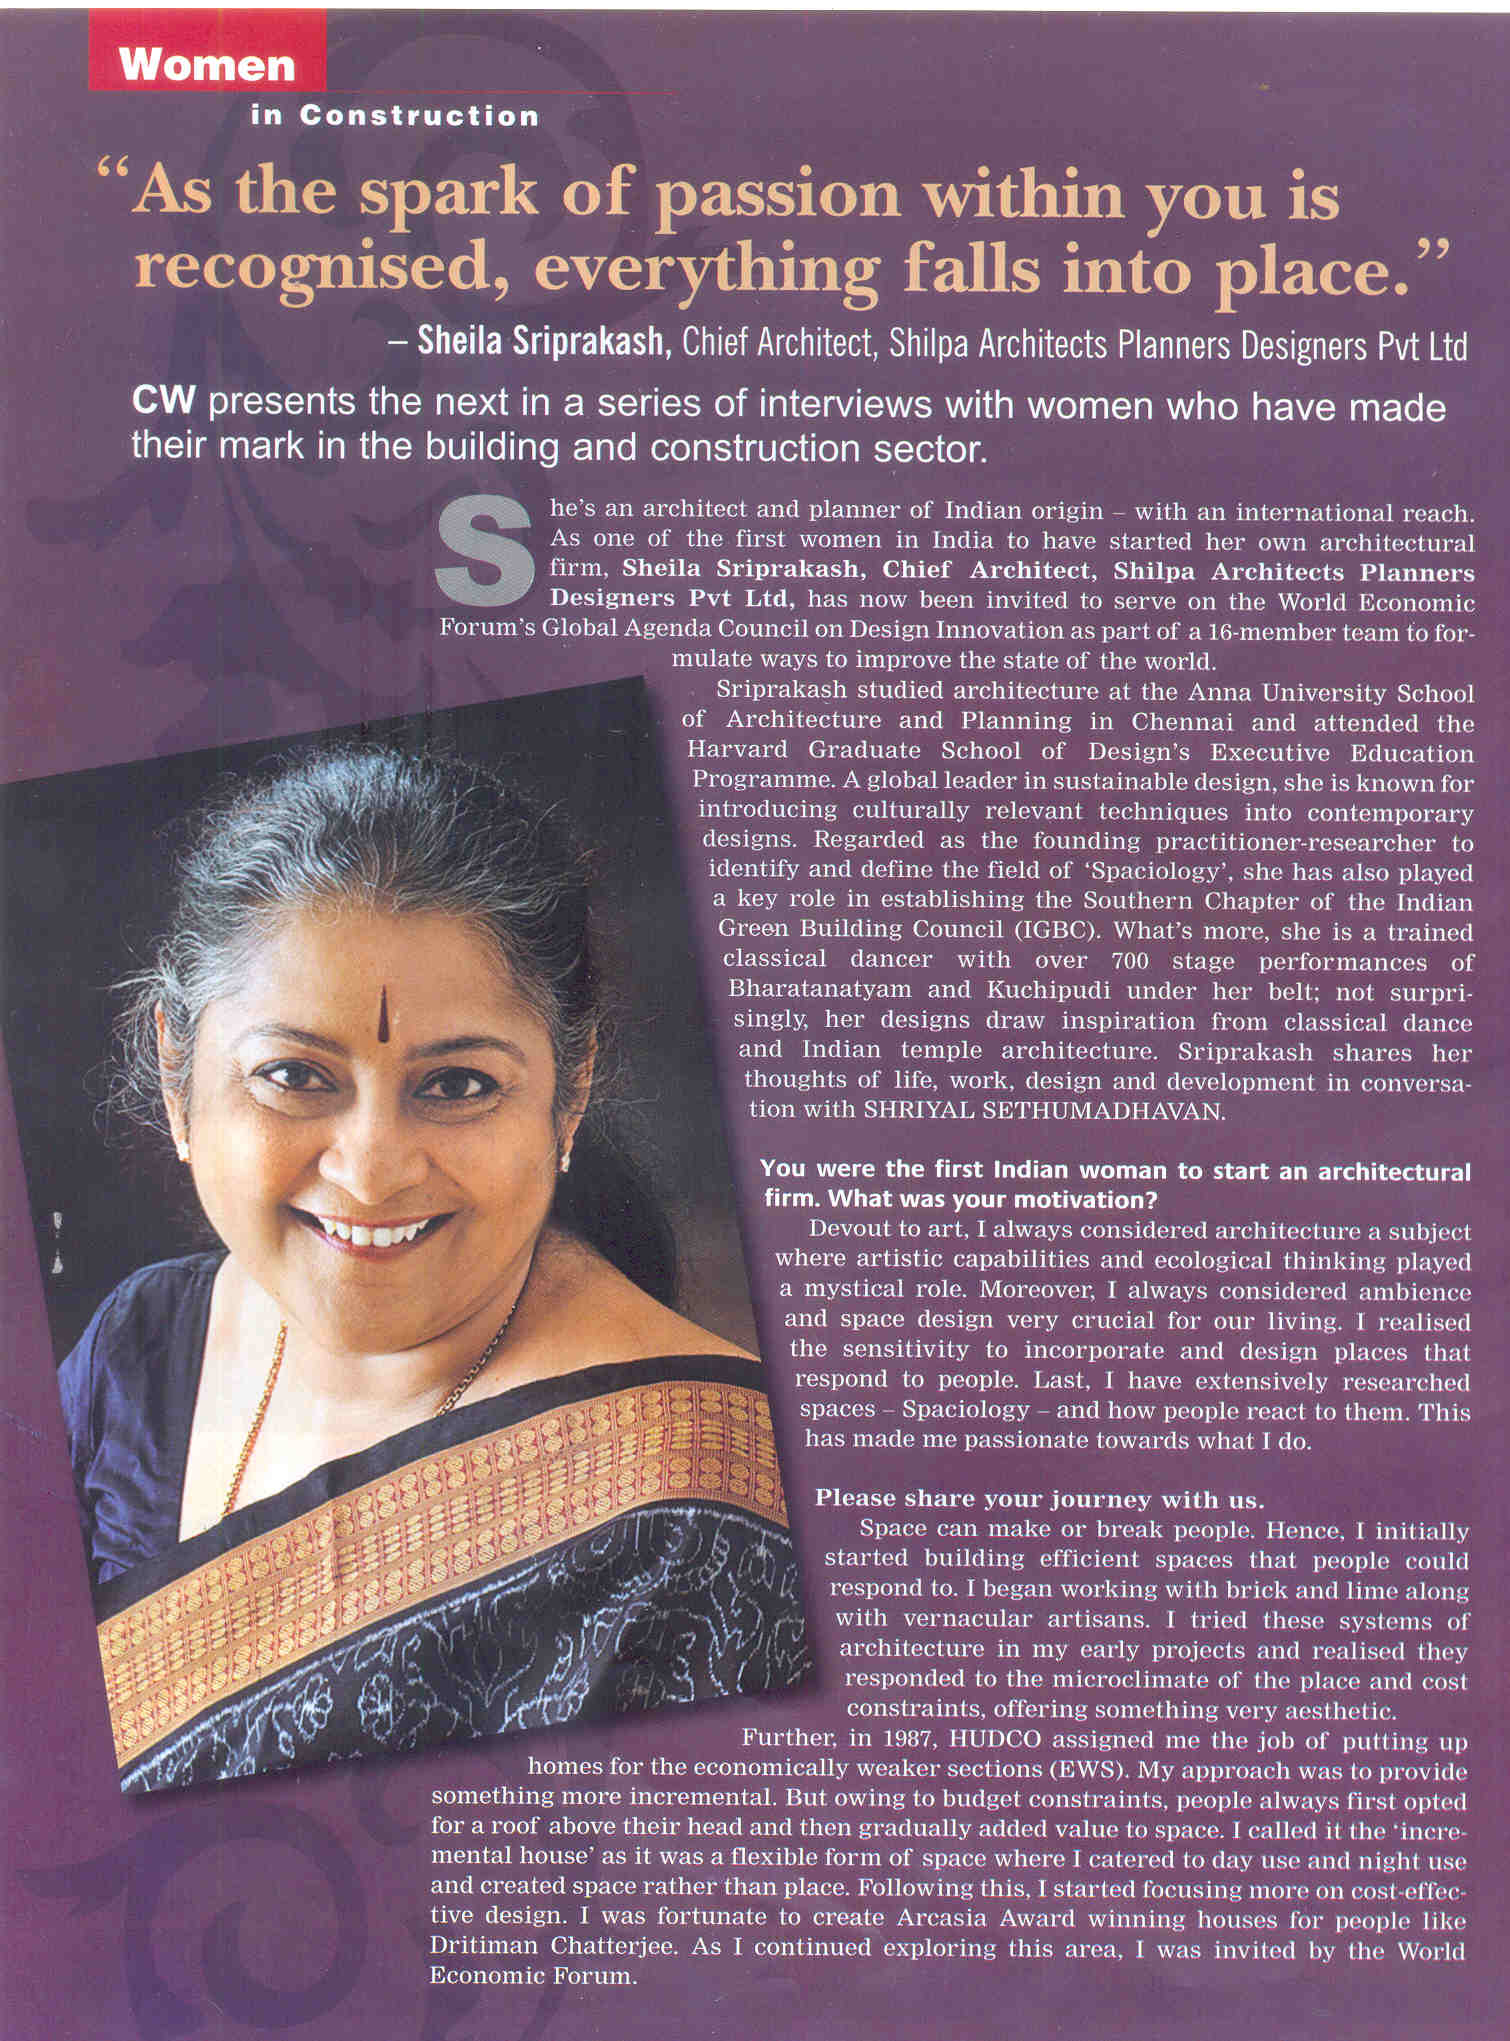 Construction World, Nov 2012: Women in Construction interview with Sheila Sri Prakash of Shilpa Architects